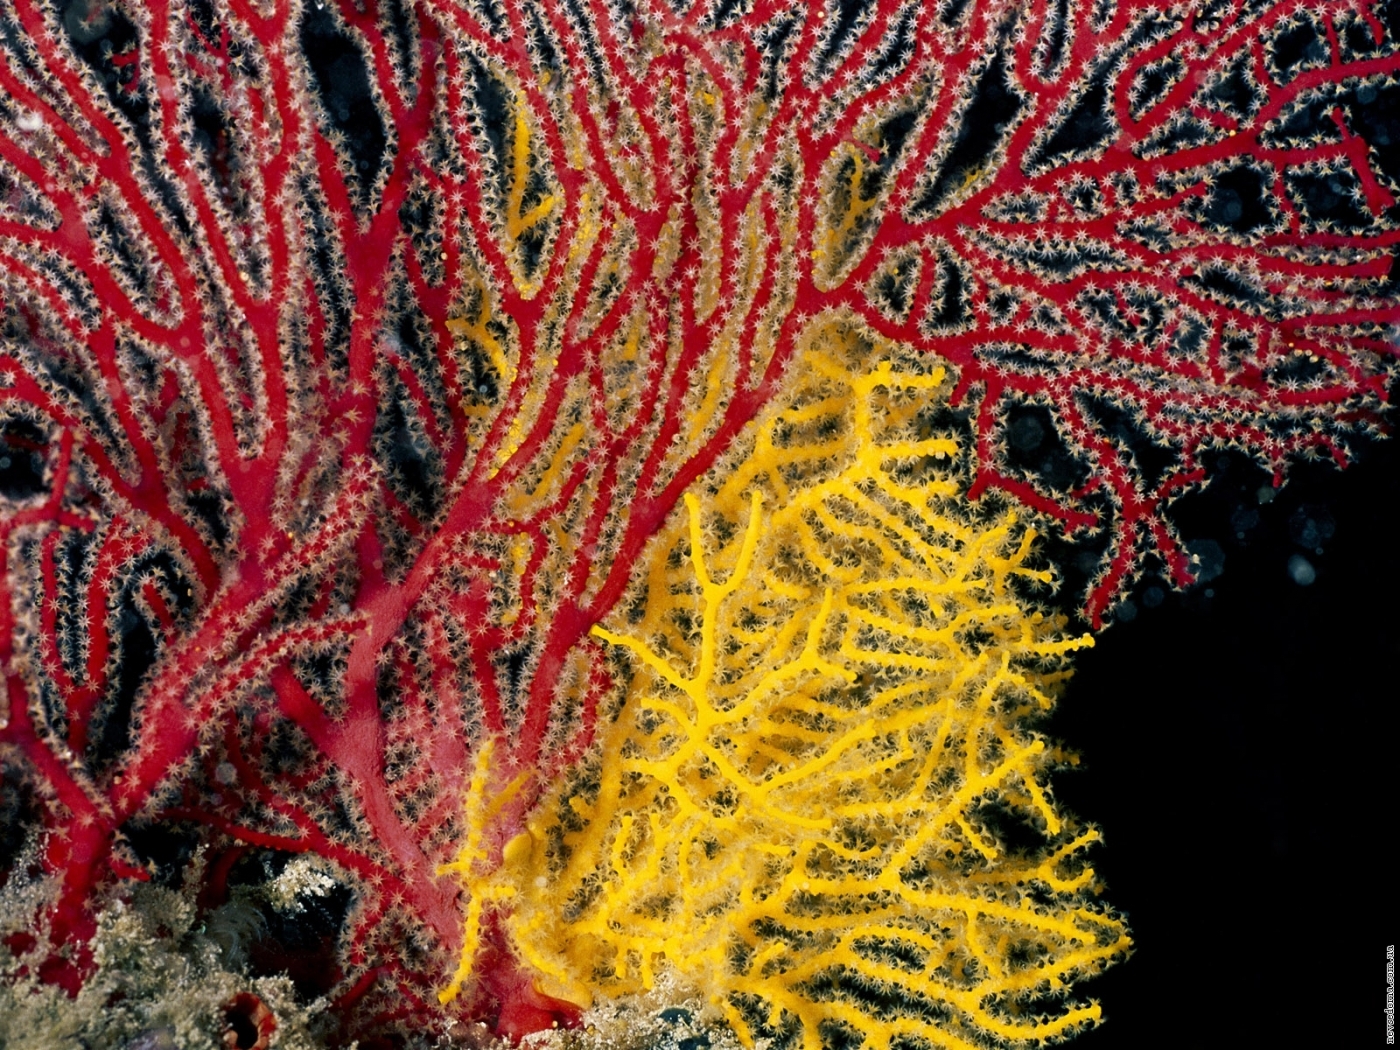 Download PC Wallpaper animals, coral, sea